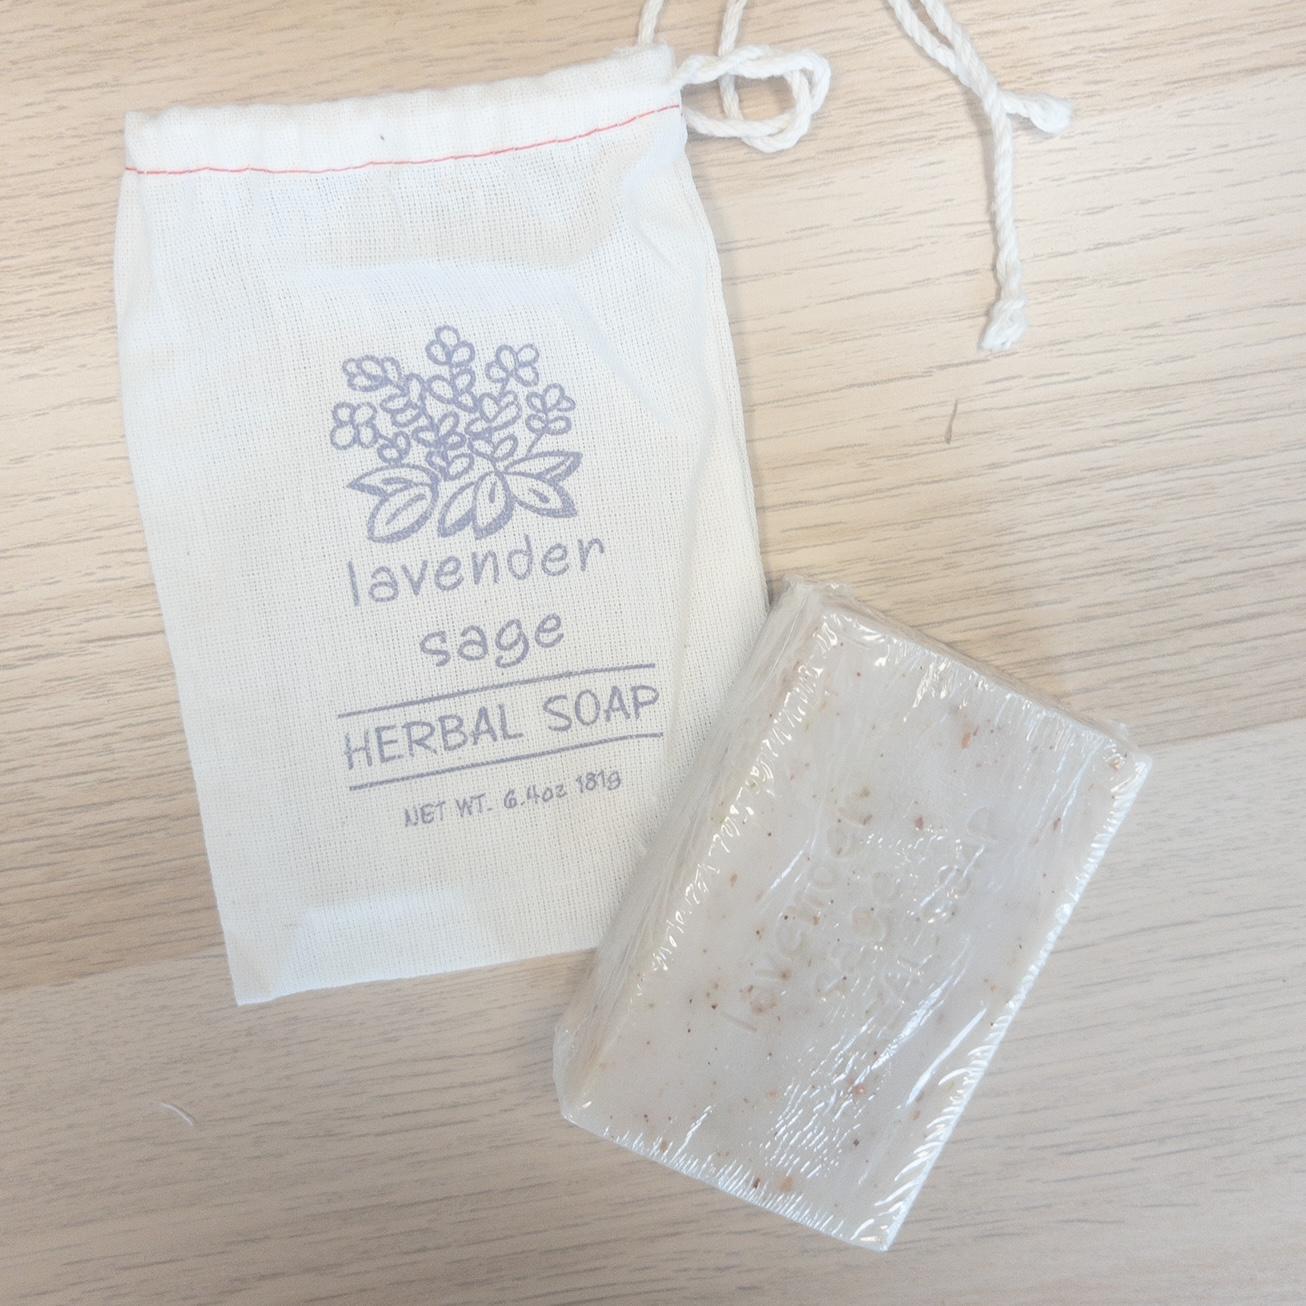 Lavender Sage Herbal Soap {6.4 oz}